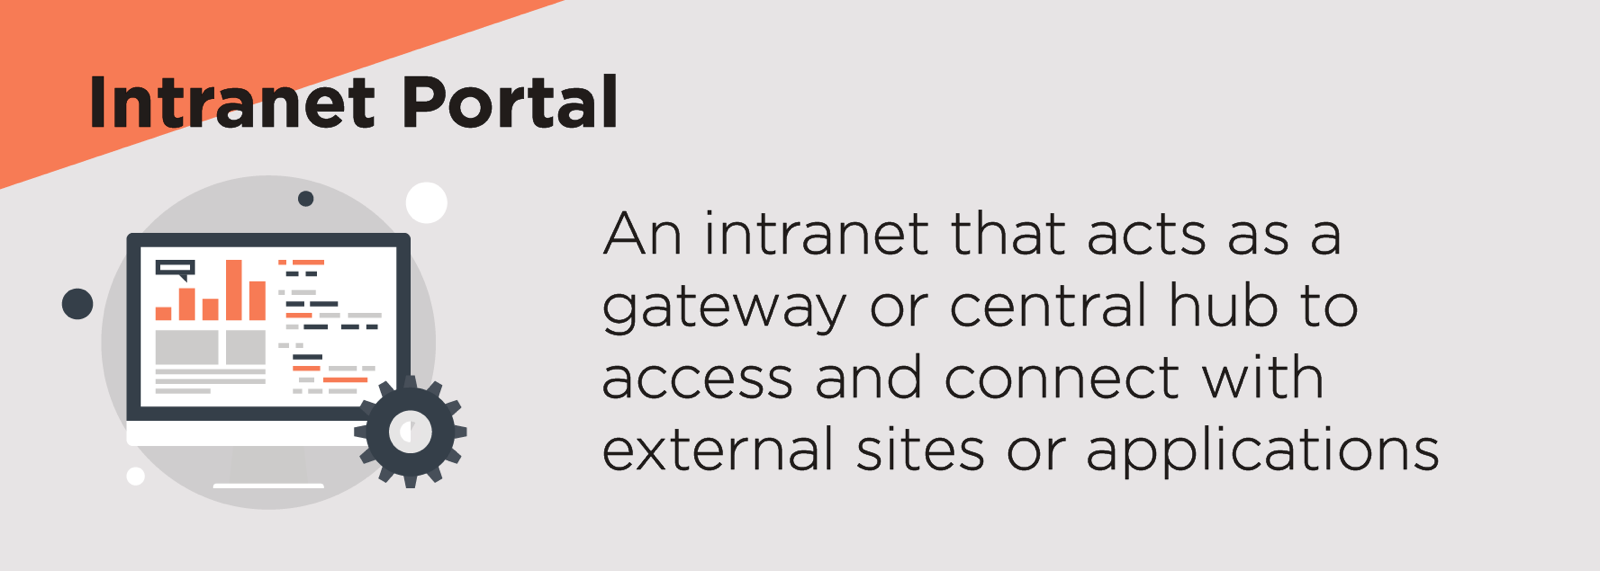 intranet portal description